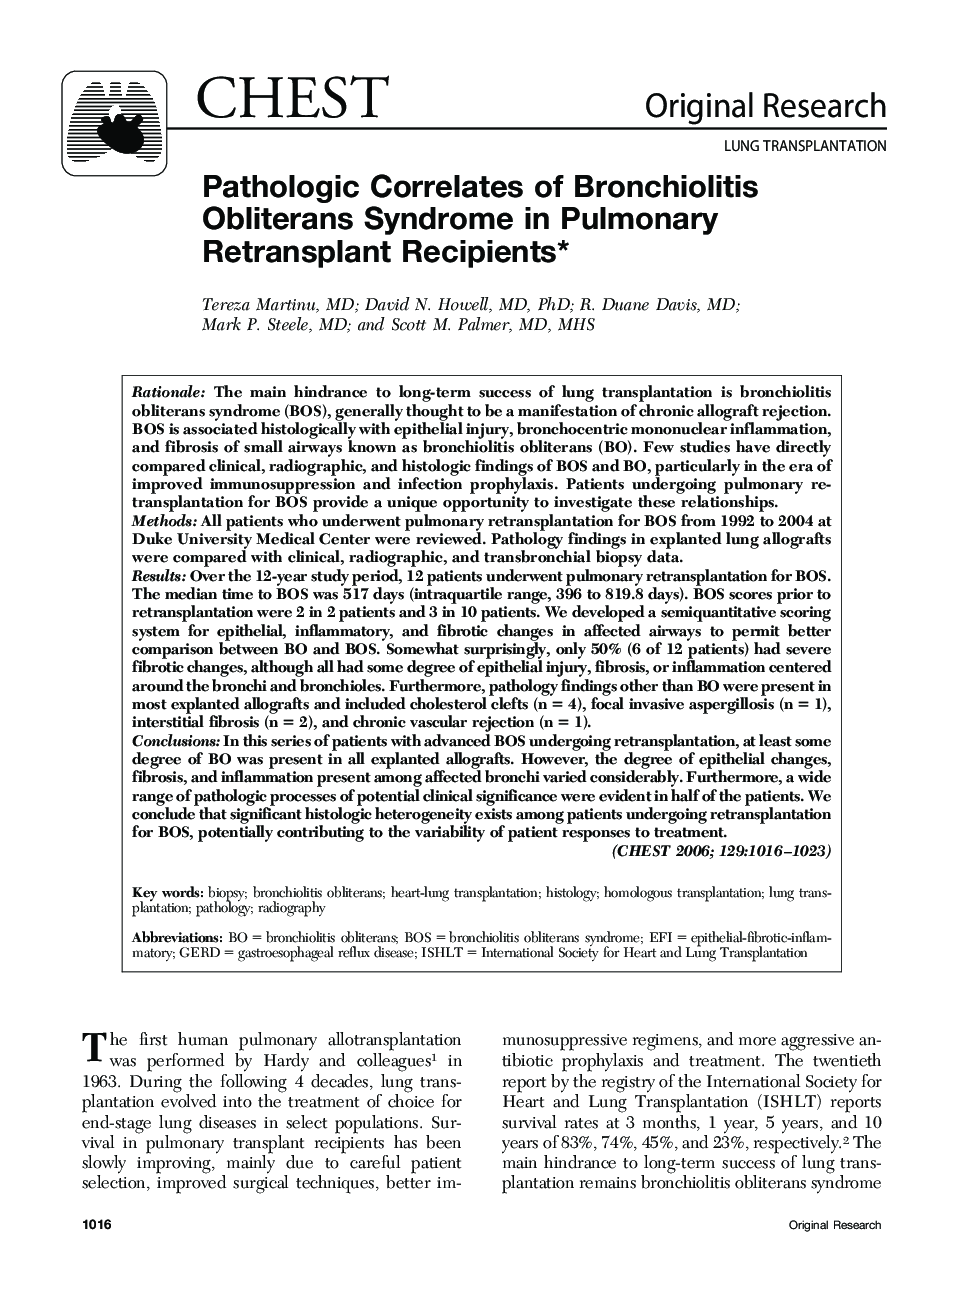 Pathologic Correlates of Bronchiolitis Obliterans Syndrome in Pulmonary Retransplant Recipients 